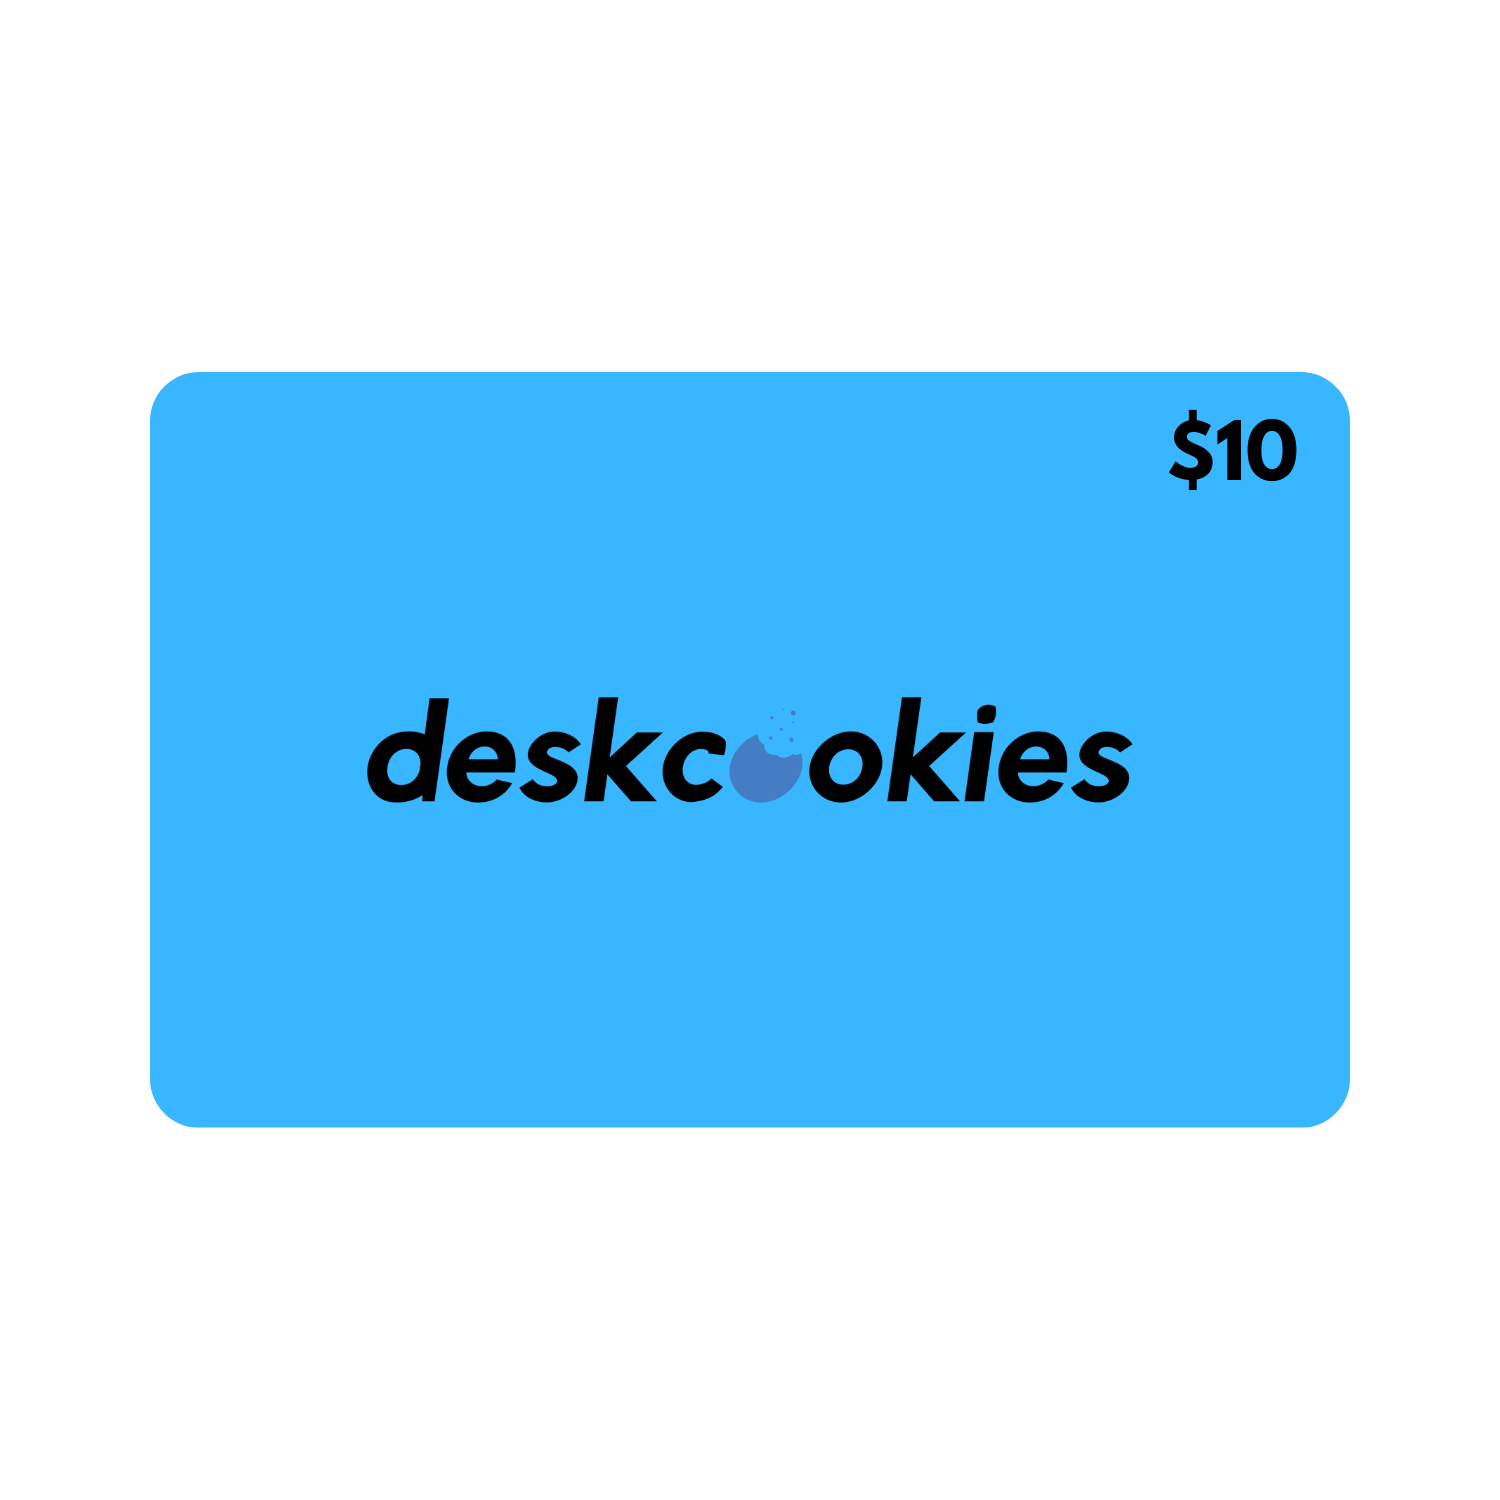 A $10 Desk Cookies digital gift card.